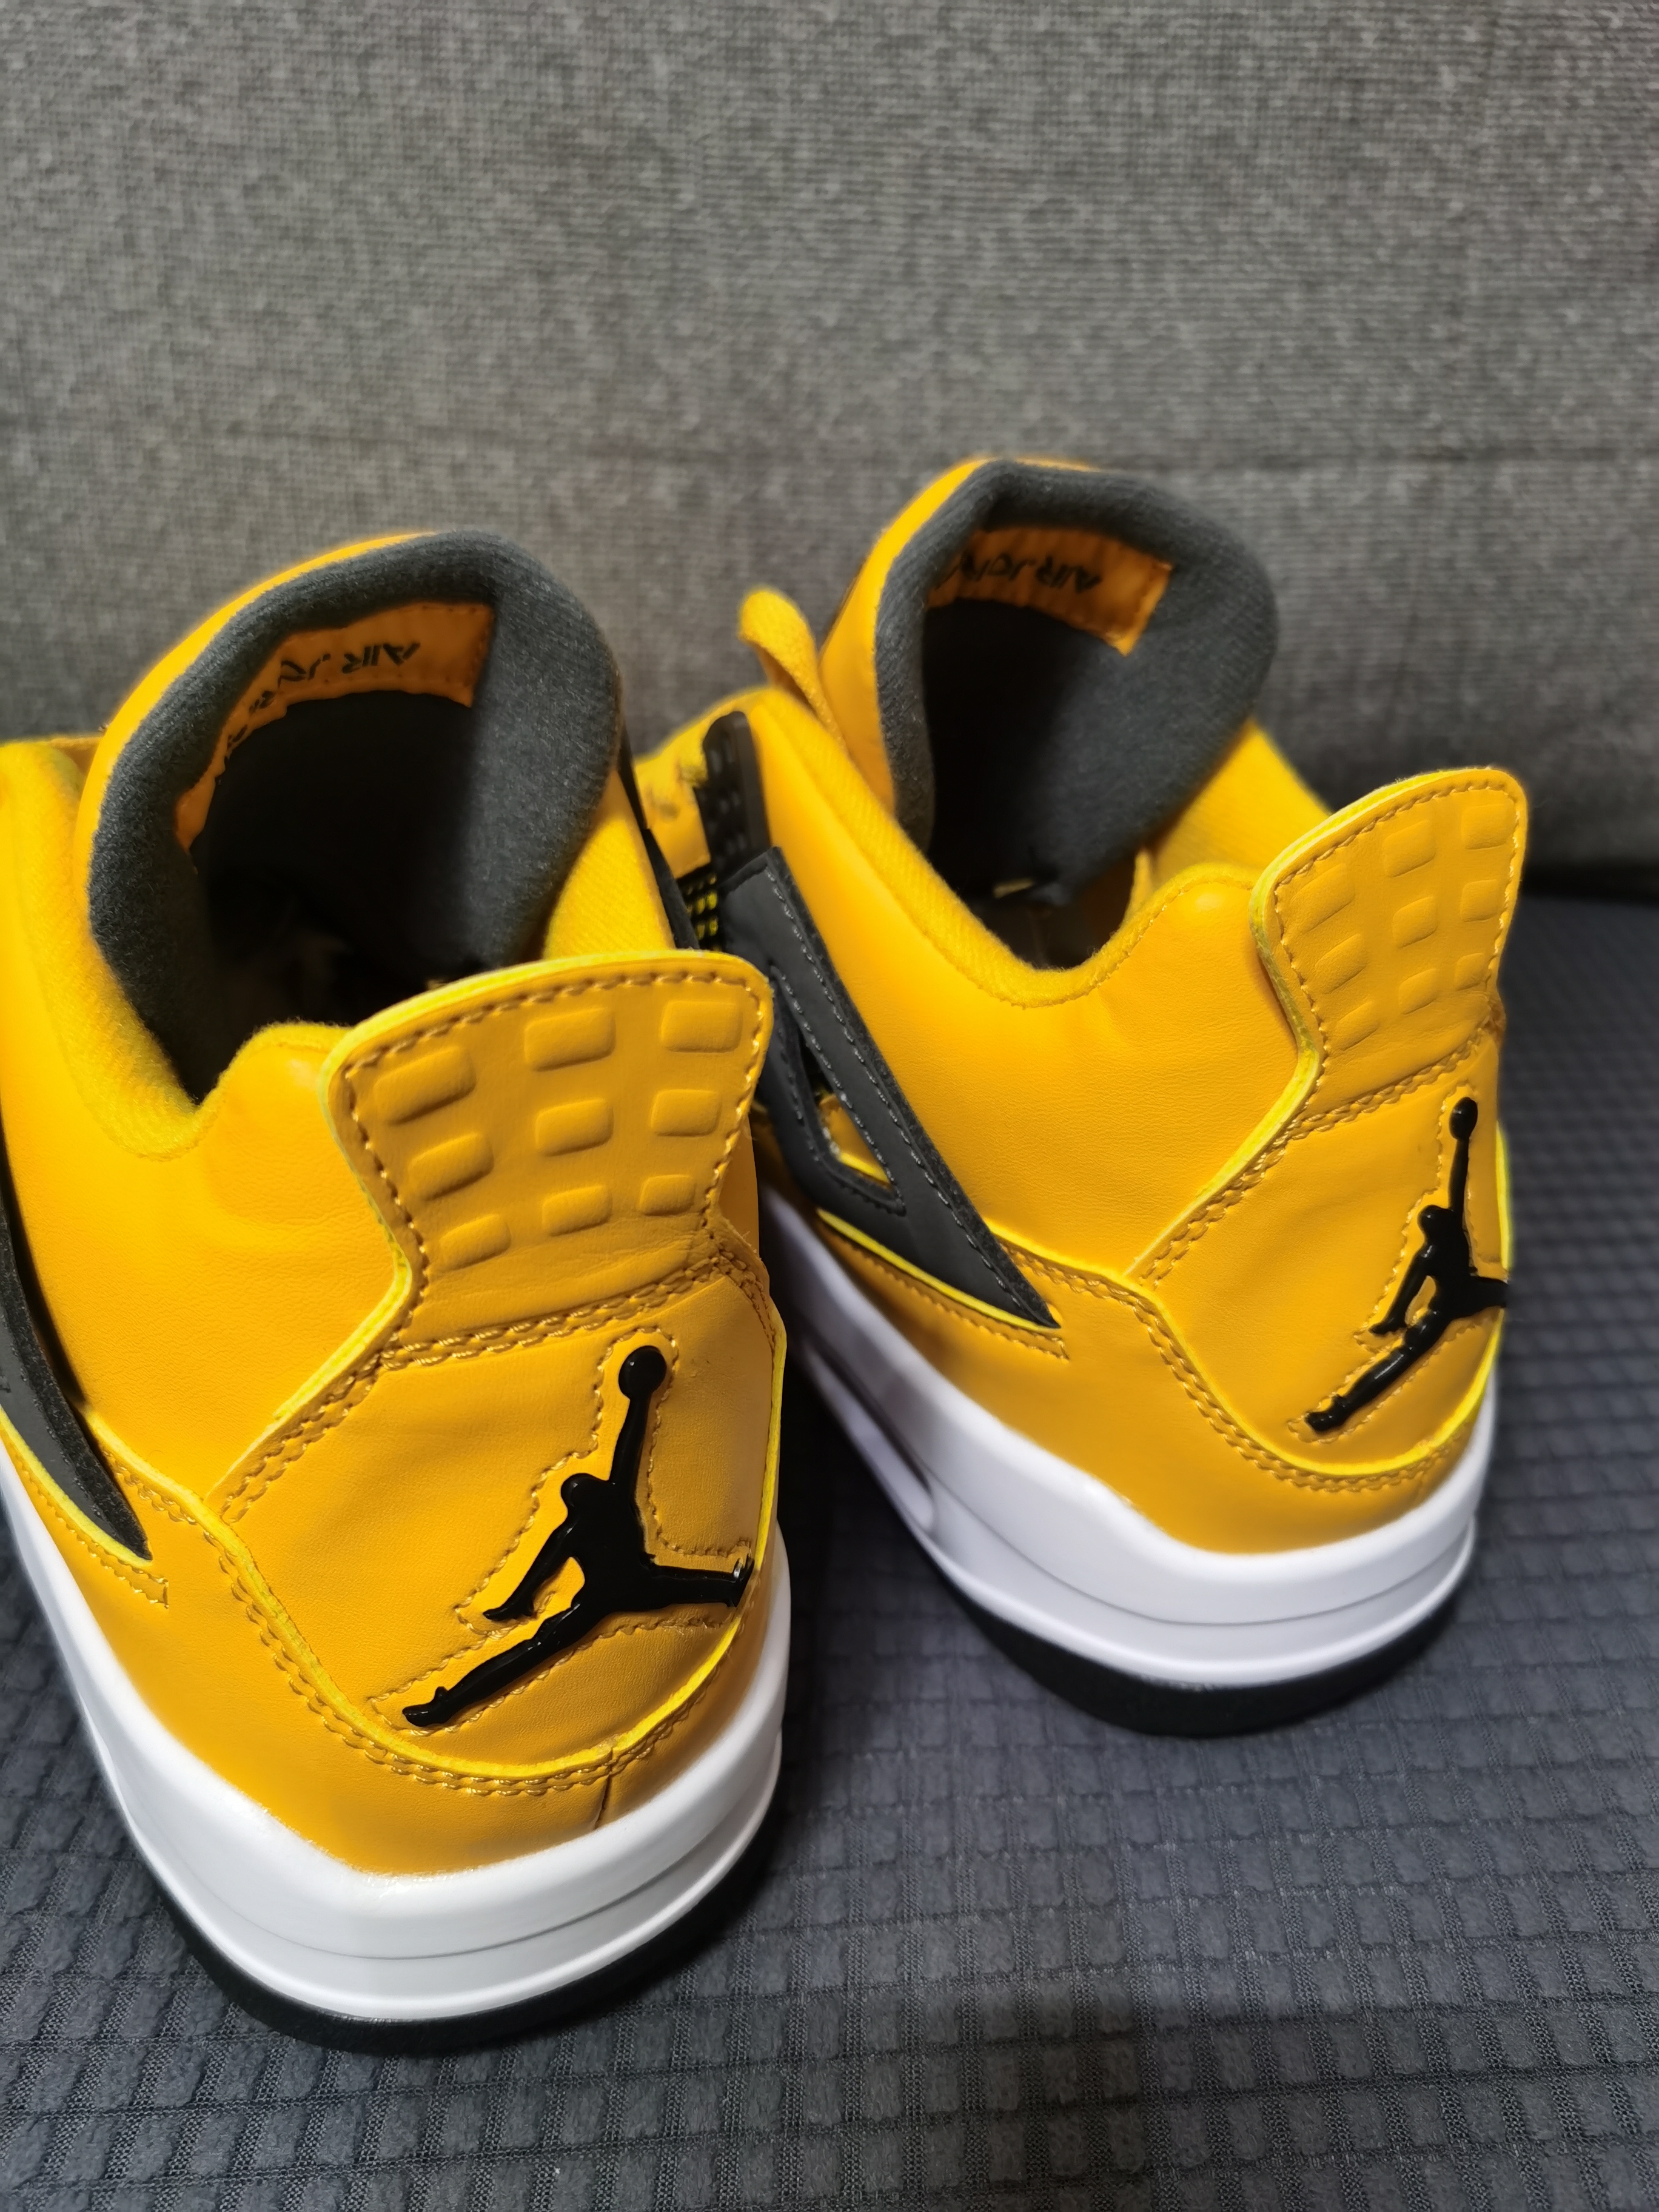 2021 Air Jordan 4 Sneakers Unisex in 240732, cheap Jordan4, only $65!